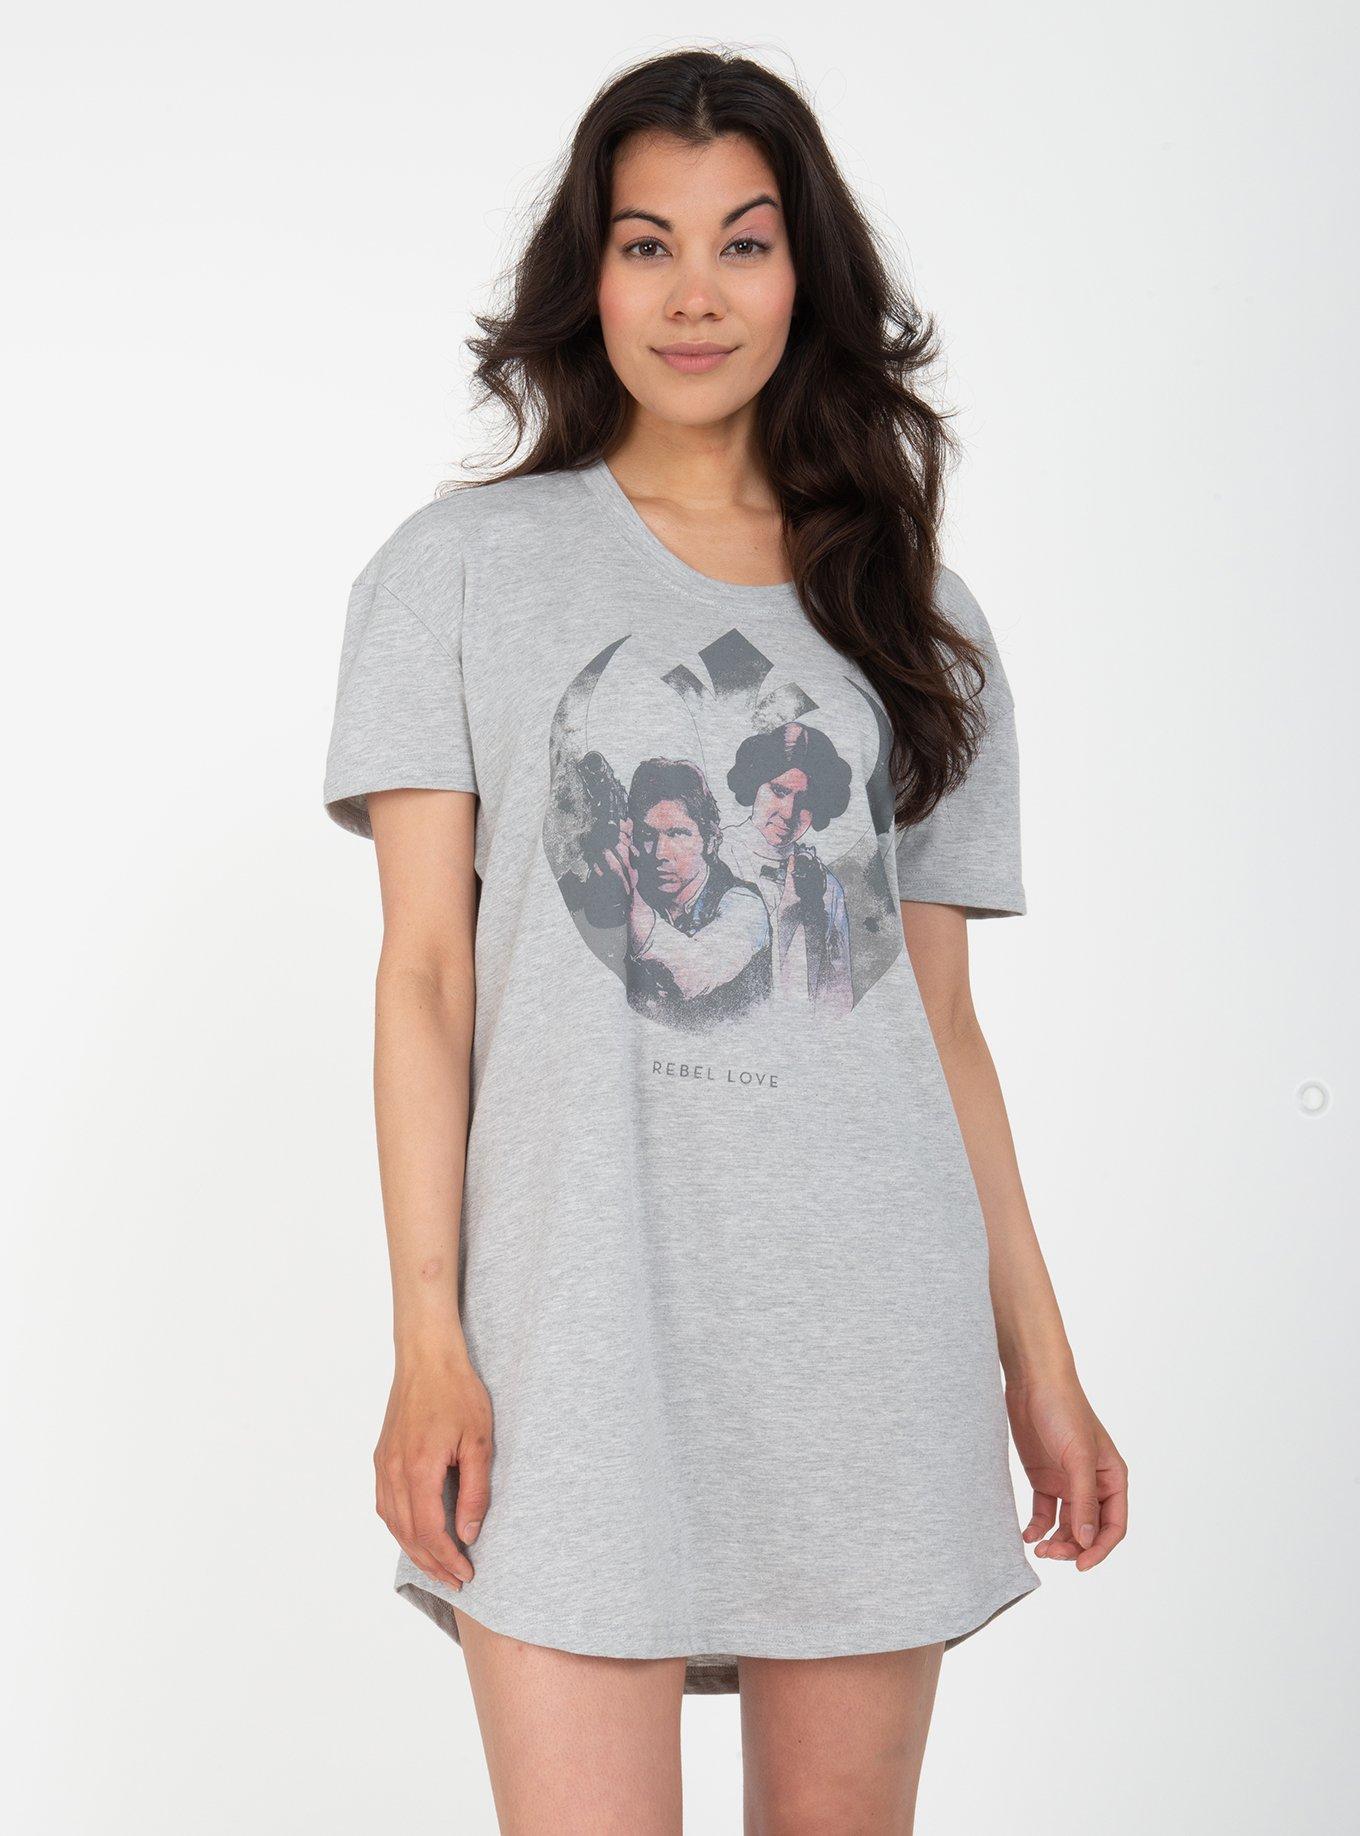 Star Wars Rebel Love Night Shirt, GREY, hi-res